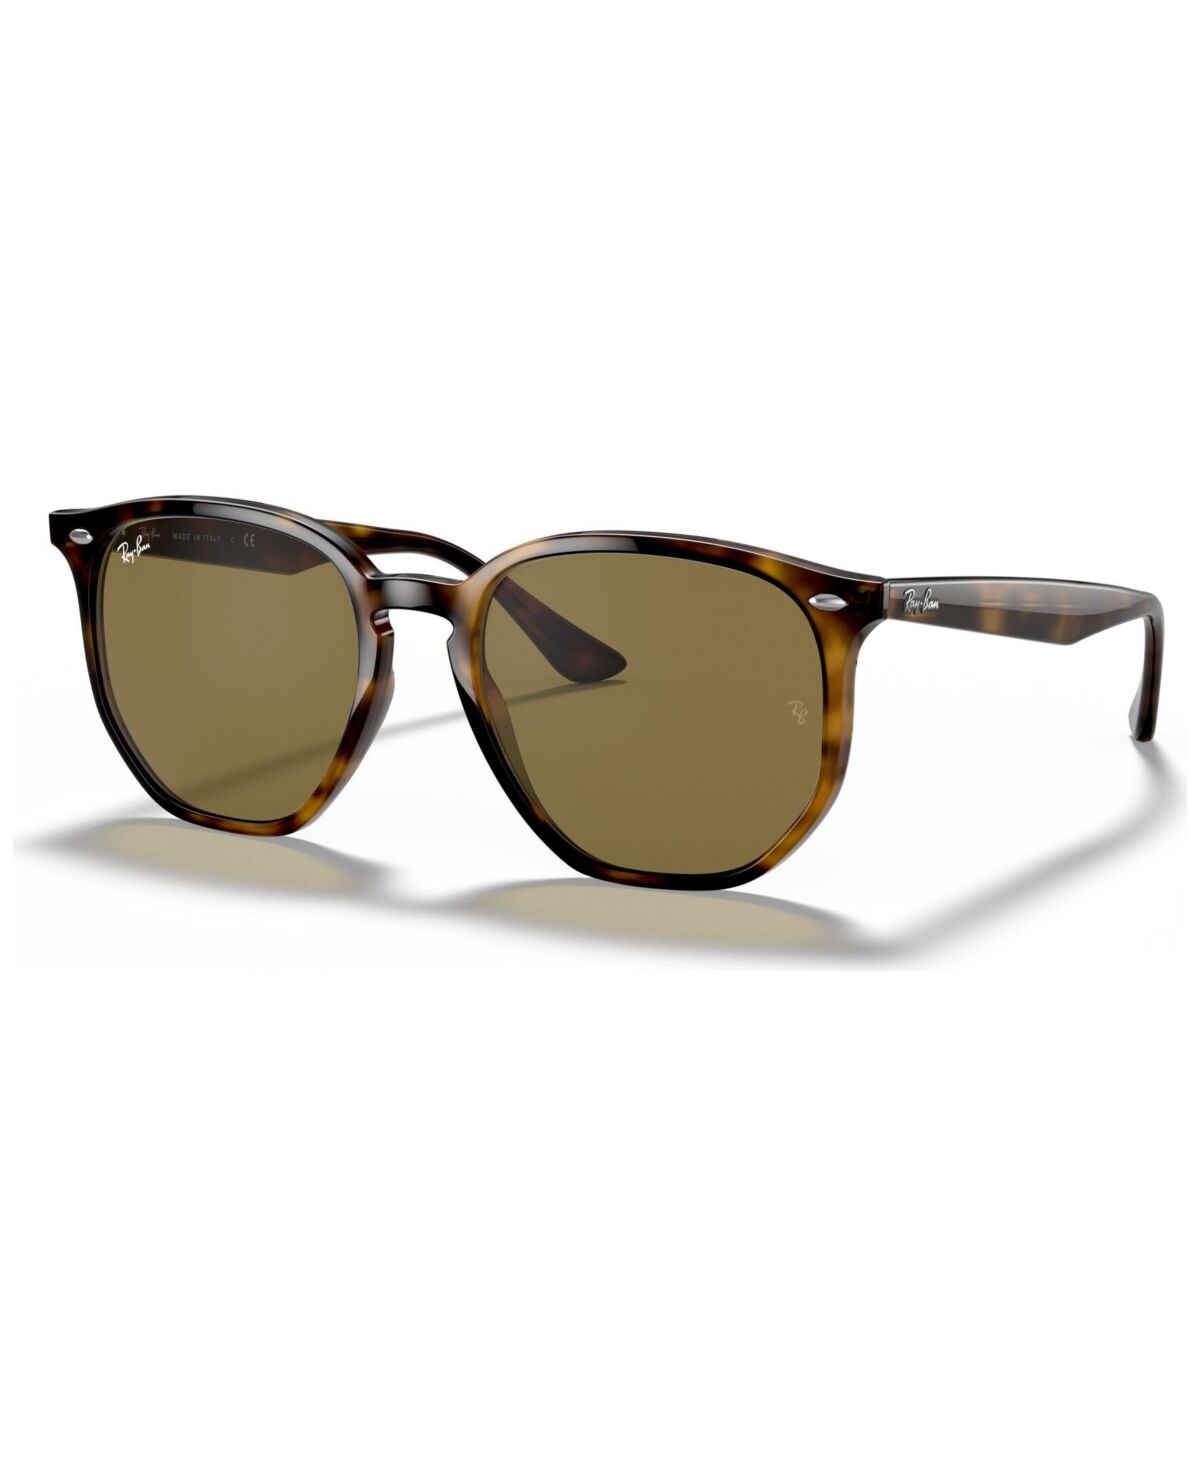 Ray-Ban Sunglasses, RB4306 - HAVANA/DARK BROWN